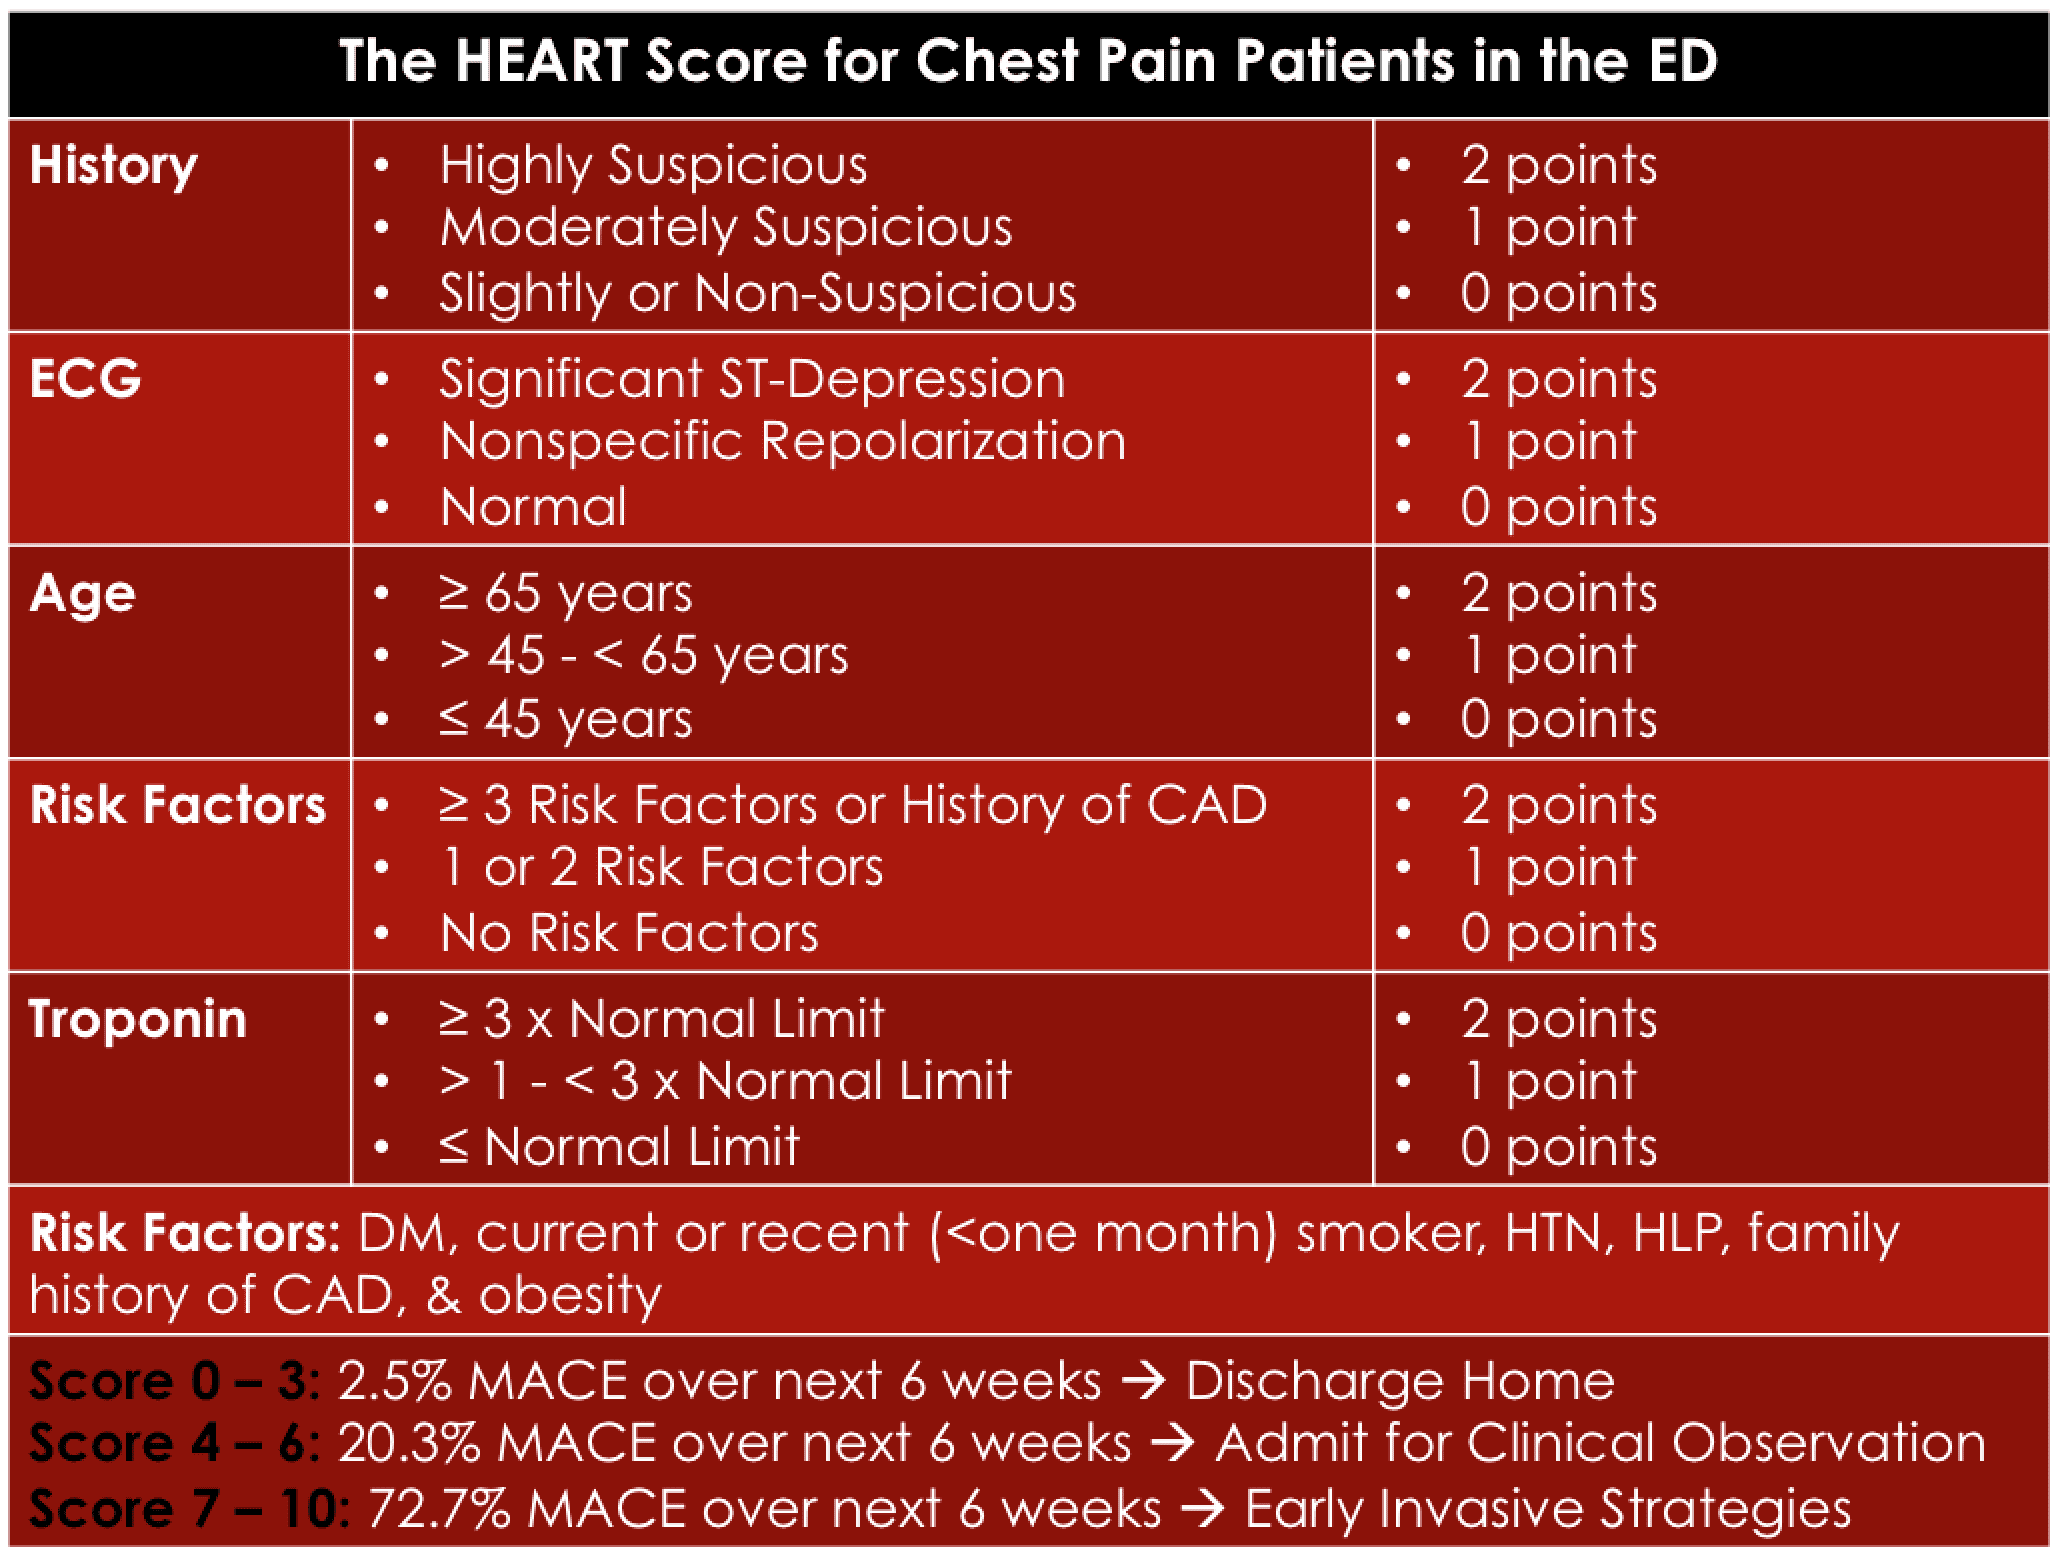 The HEART Score